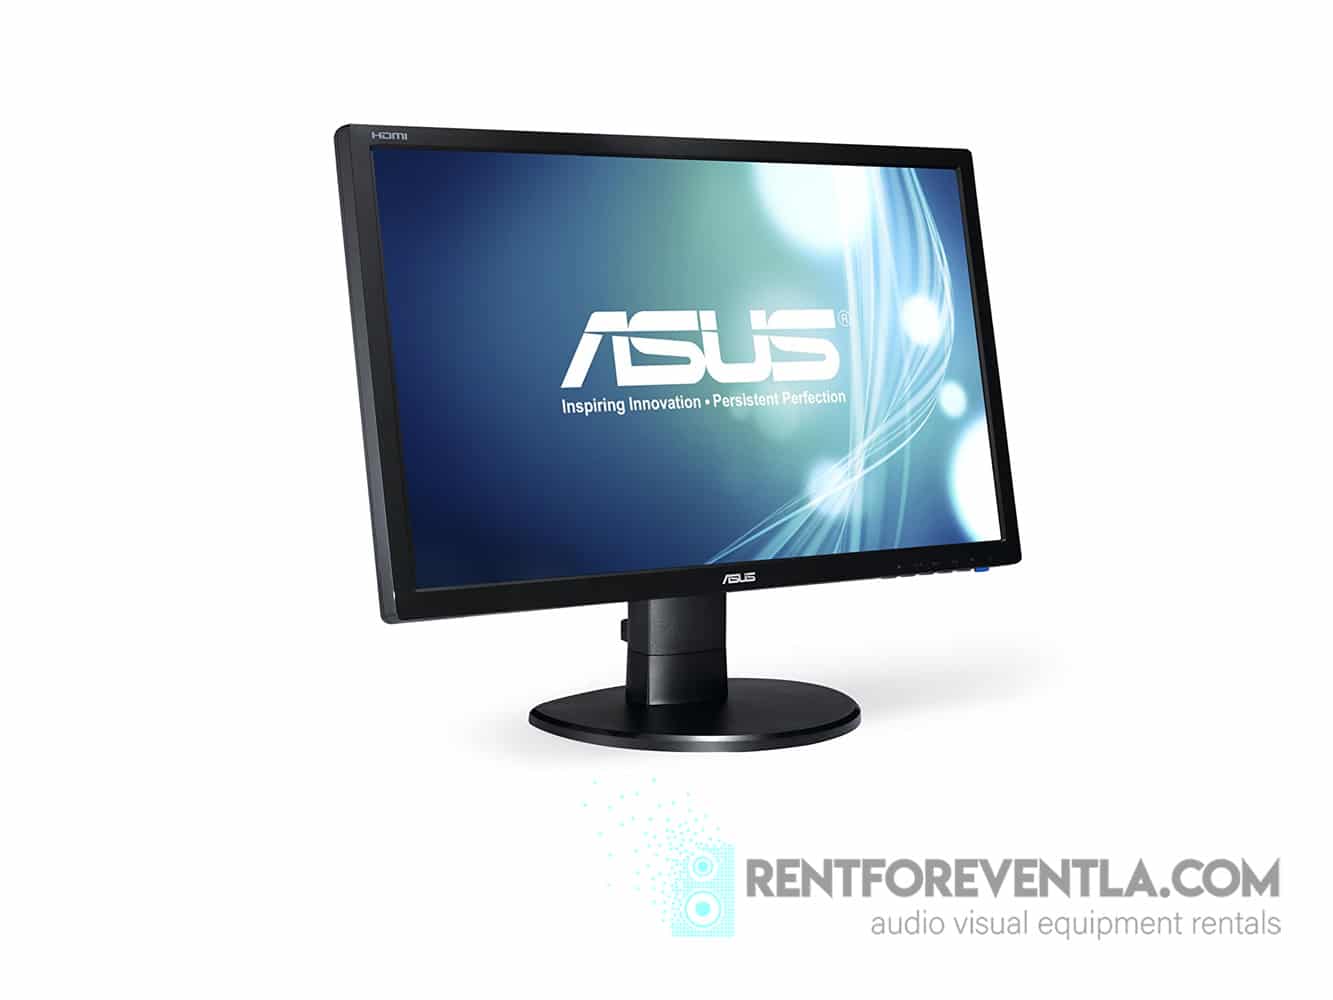 Asus VE228H 21.5-inch Full HD LCD/TFT Black Computer Monitor LED Display 